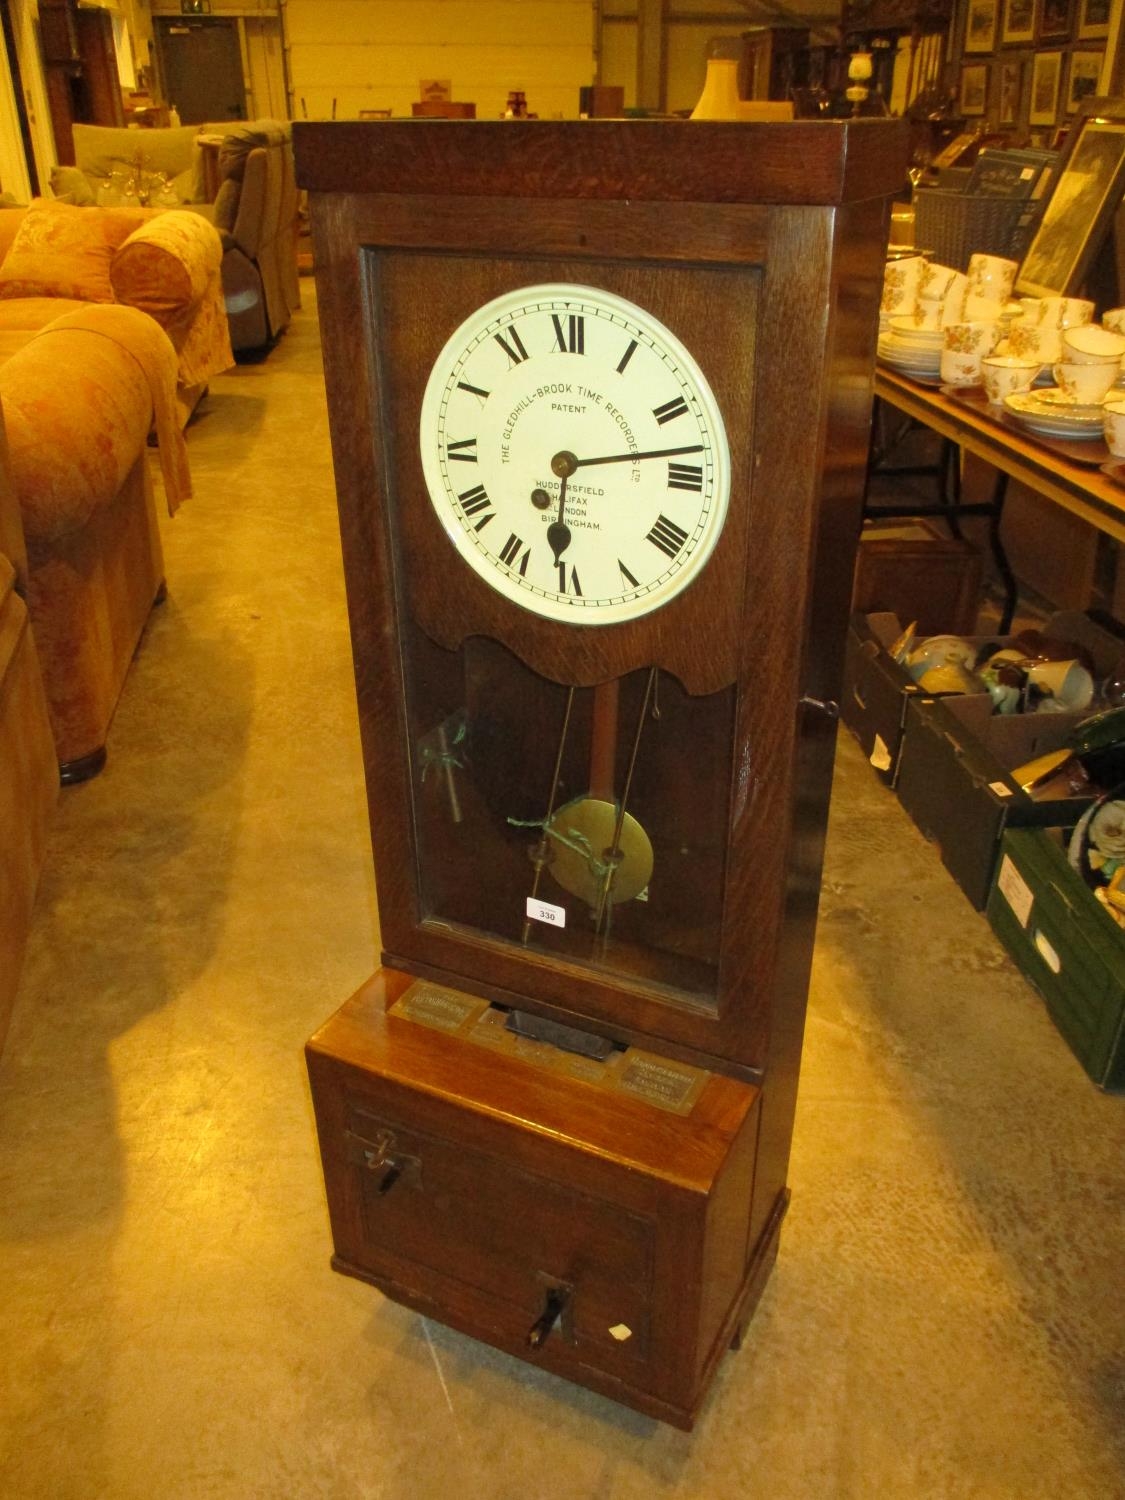 The Gledhill-Brook Time Recording Clock